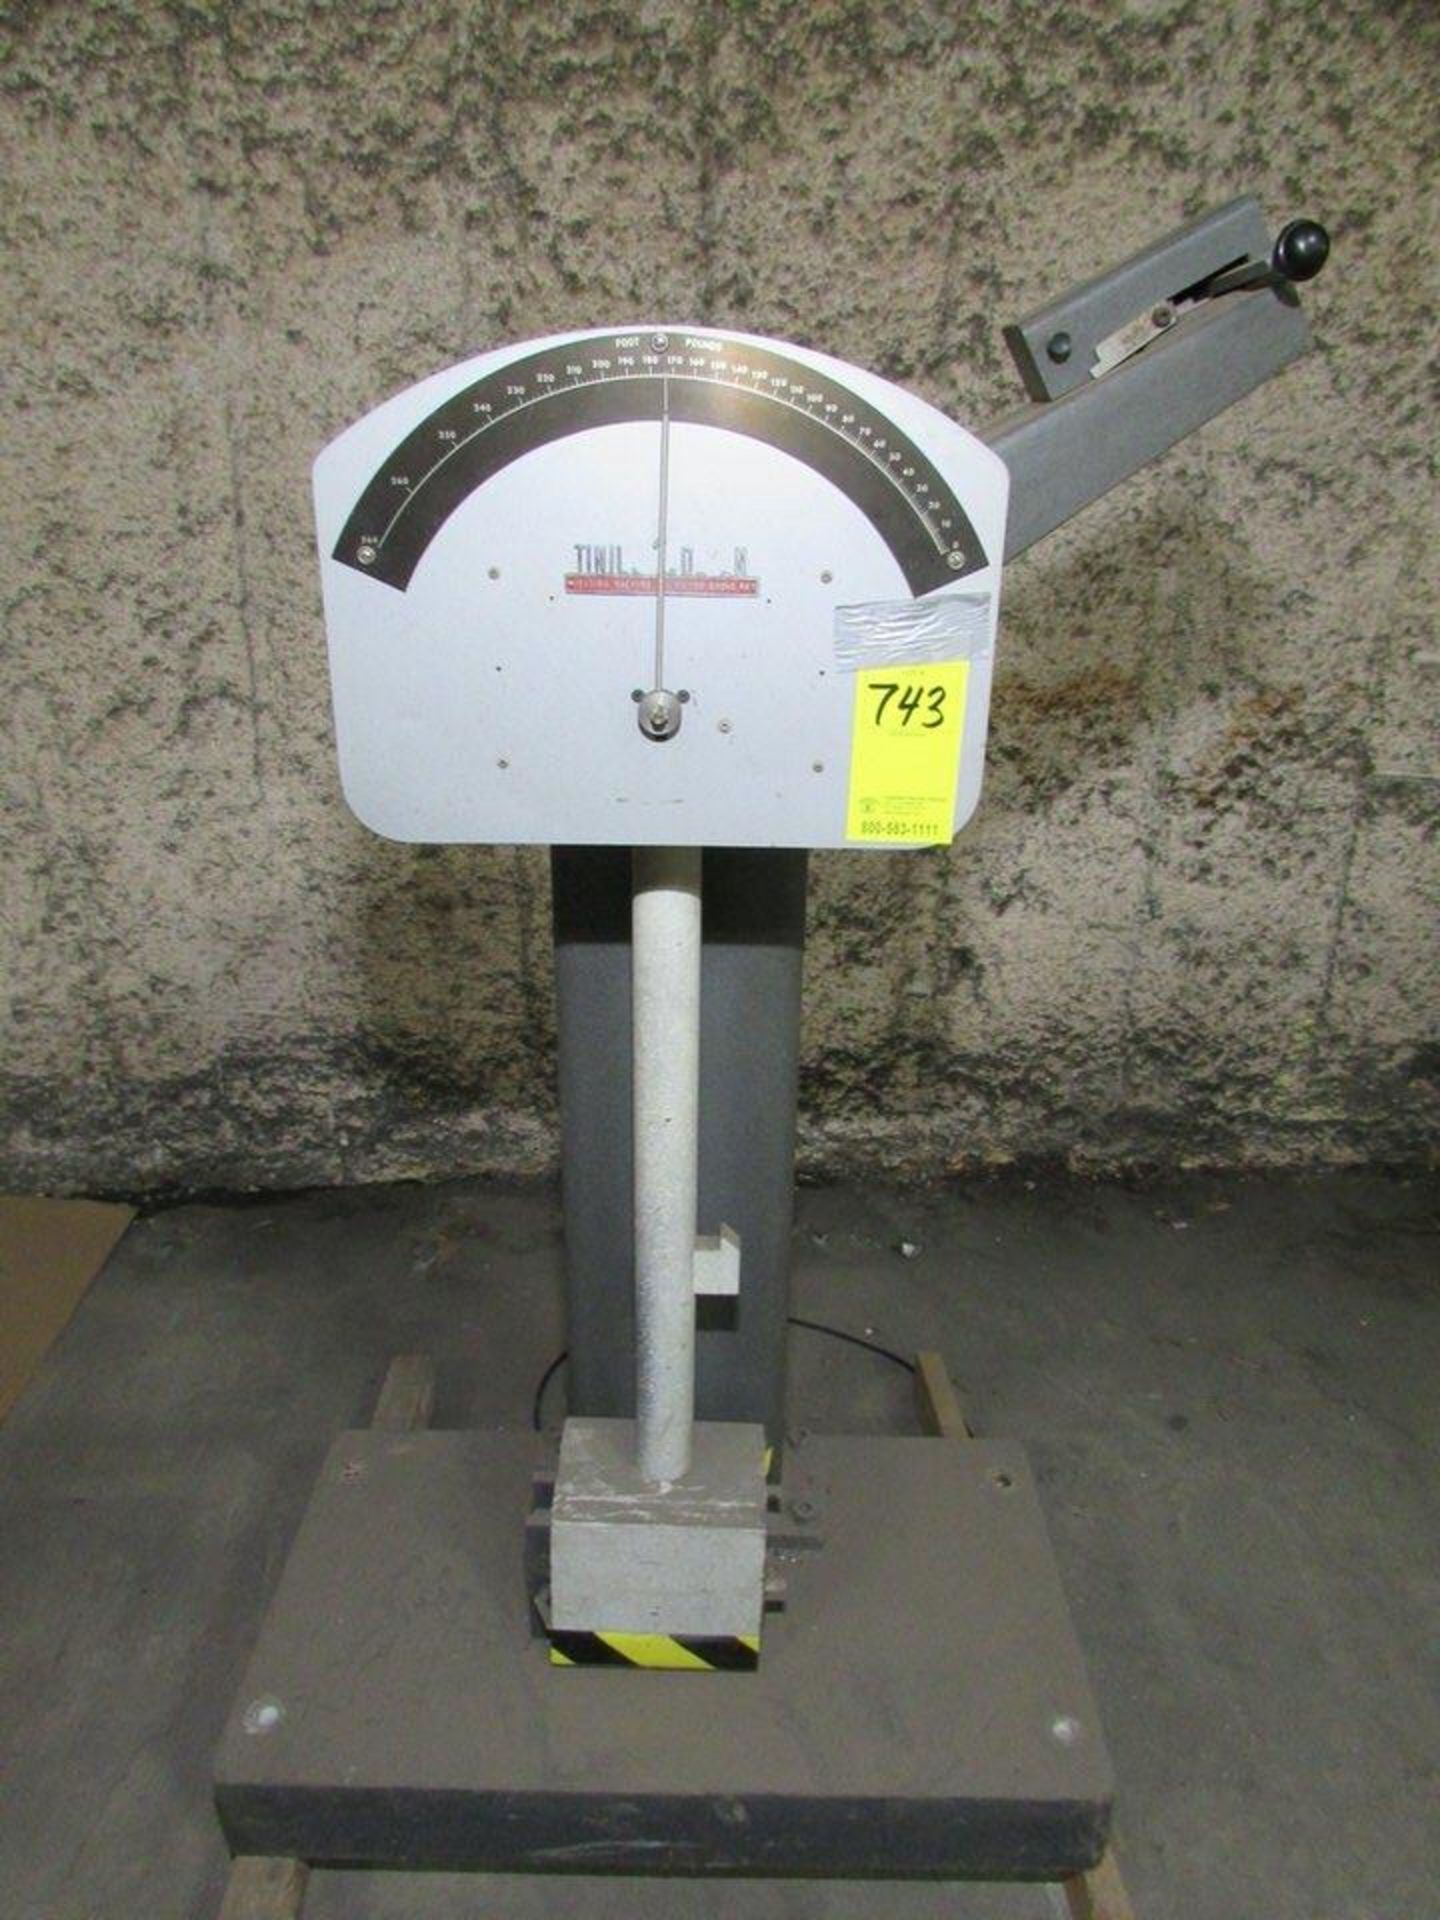 Tinius Olson Pendulum Impact Testing Machine, s/n- 121940. Loc. 420 Main Ave E, West Fargo, ND - Image 2 of 6